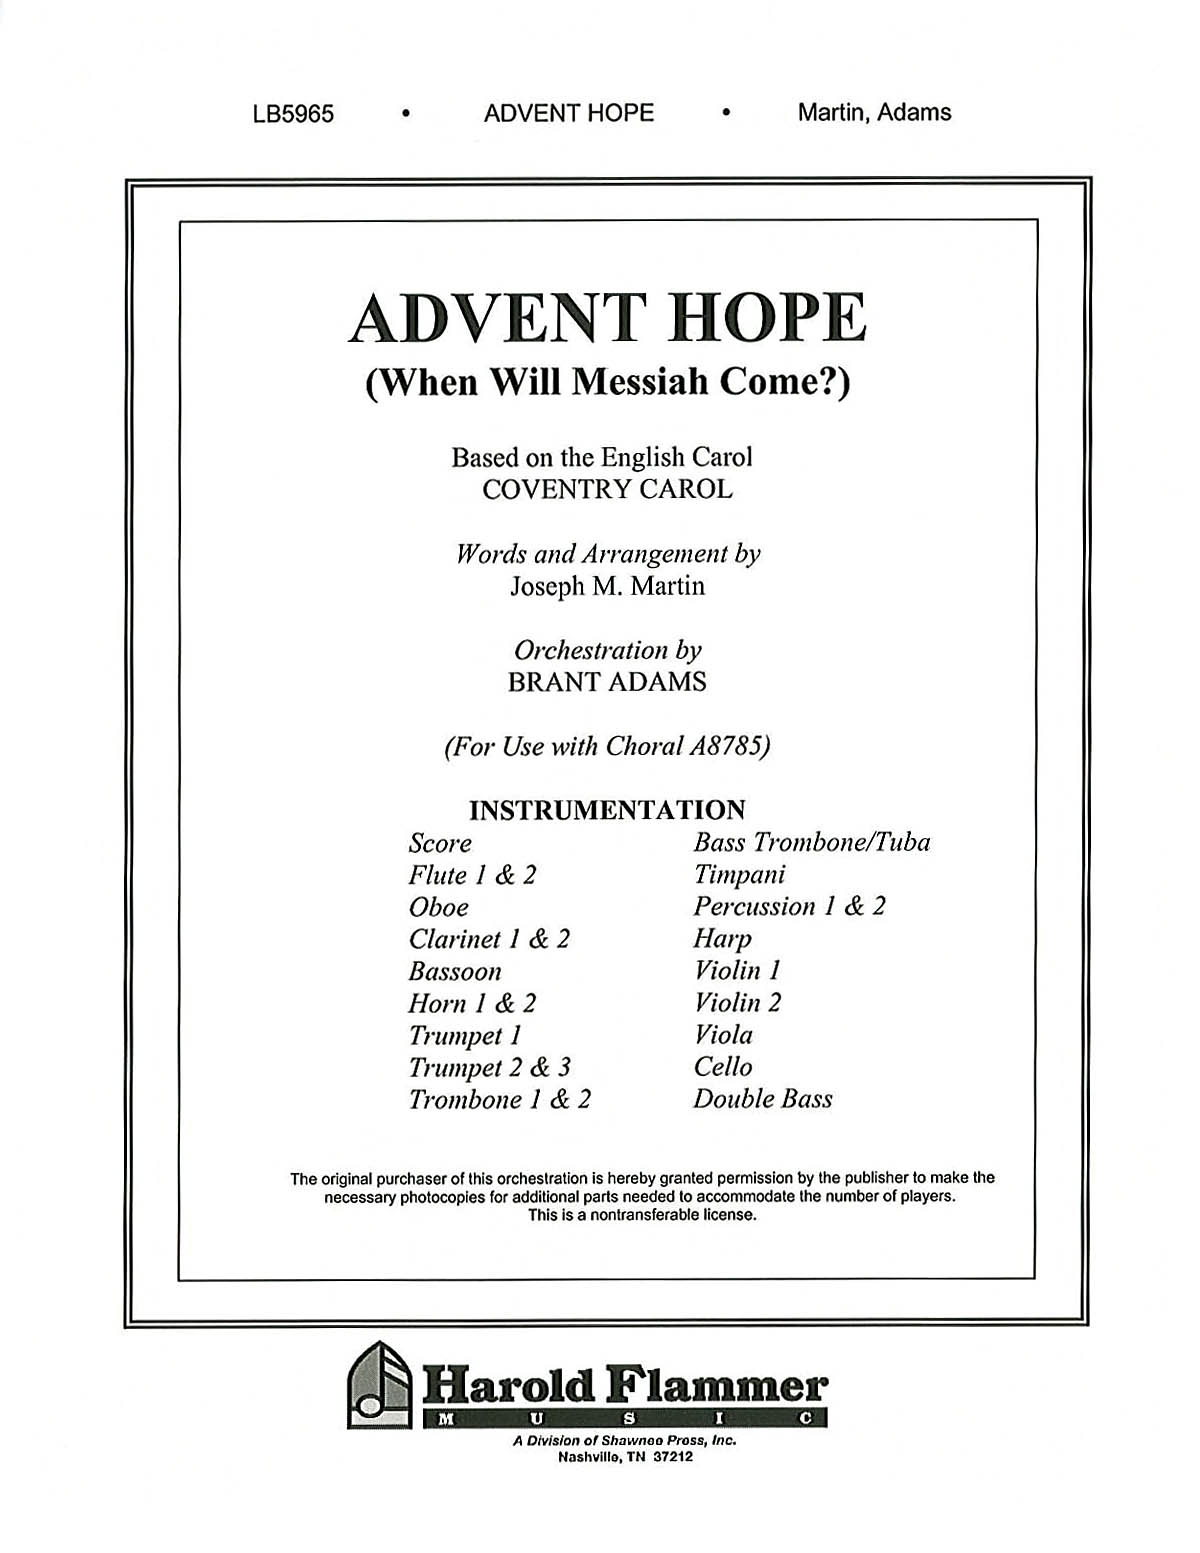 Joseph M. Martin: Advent Hope: Orchestra: Parts